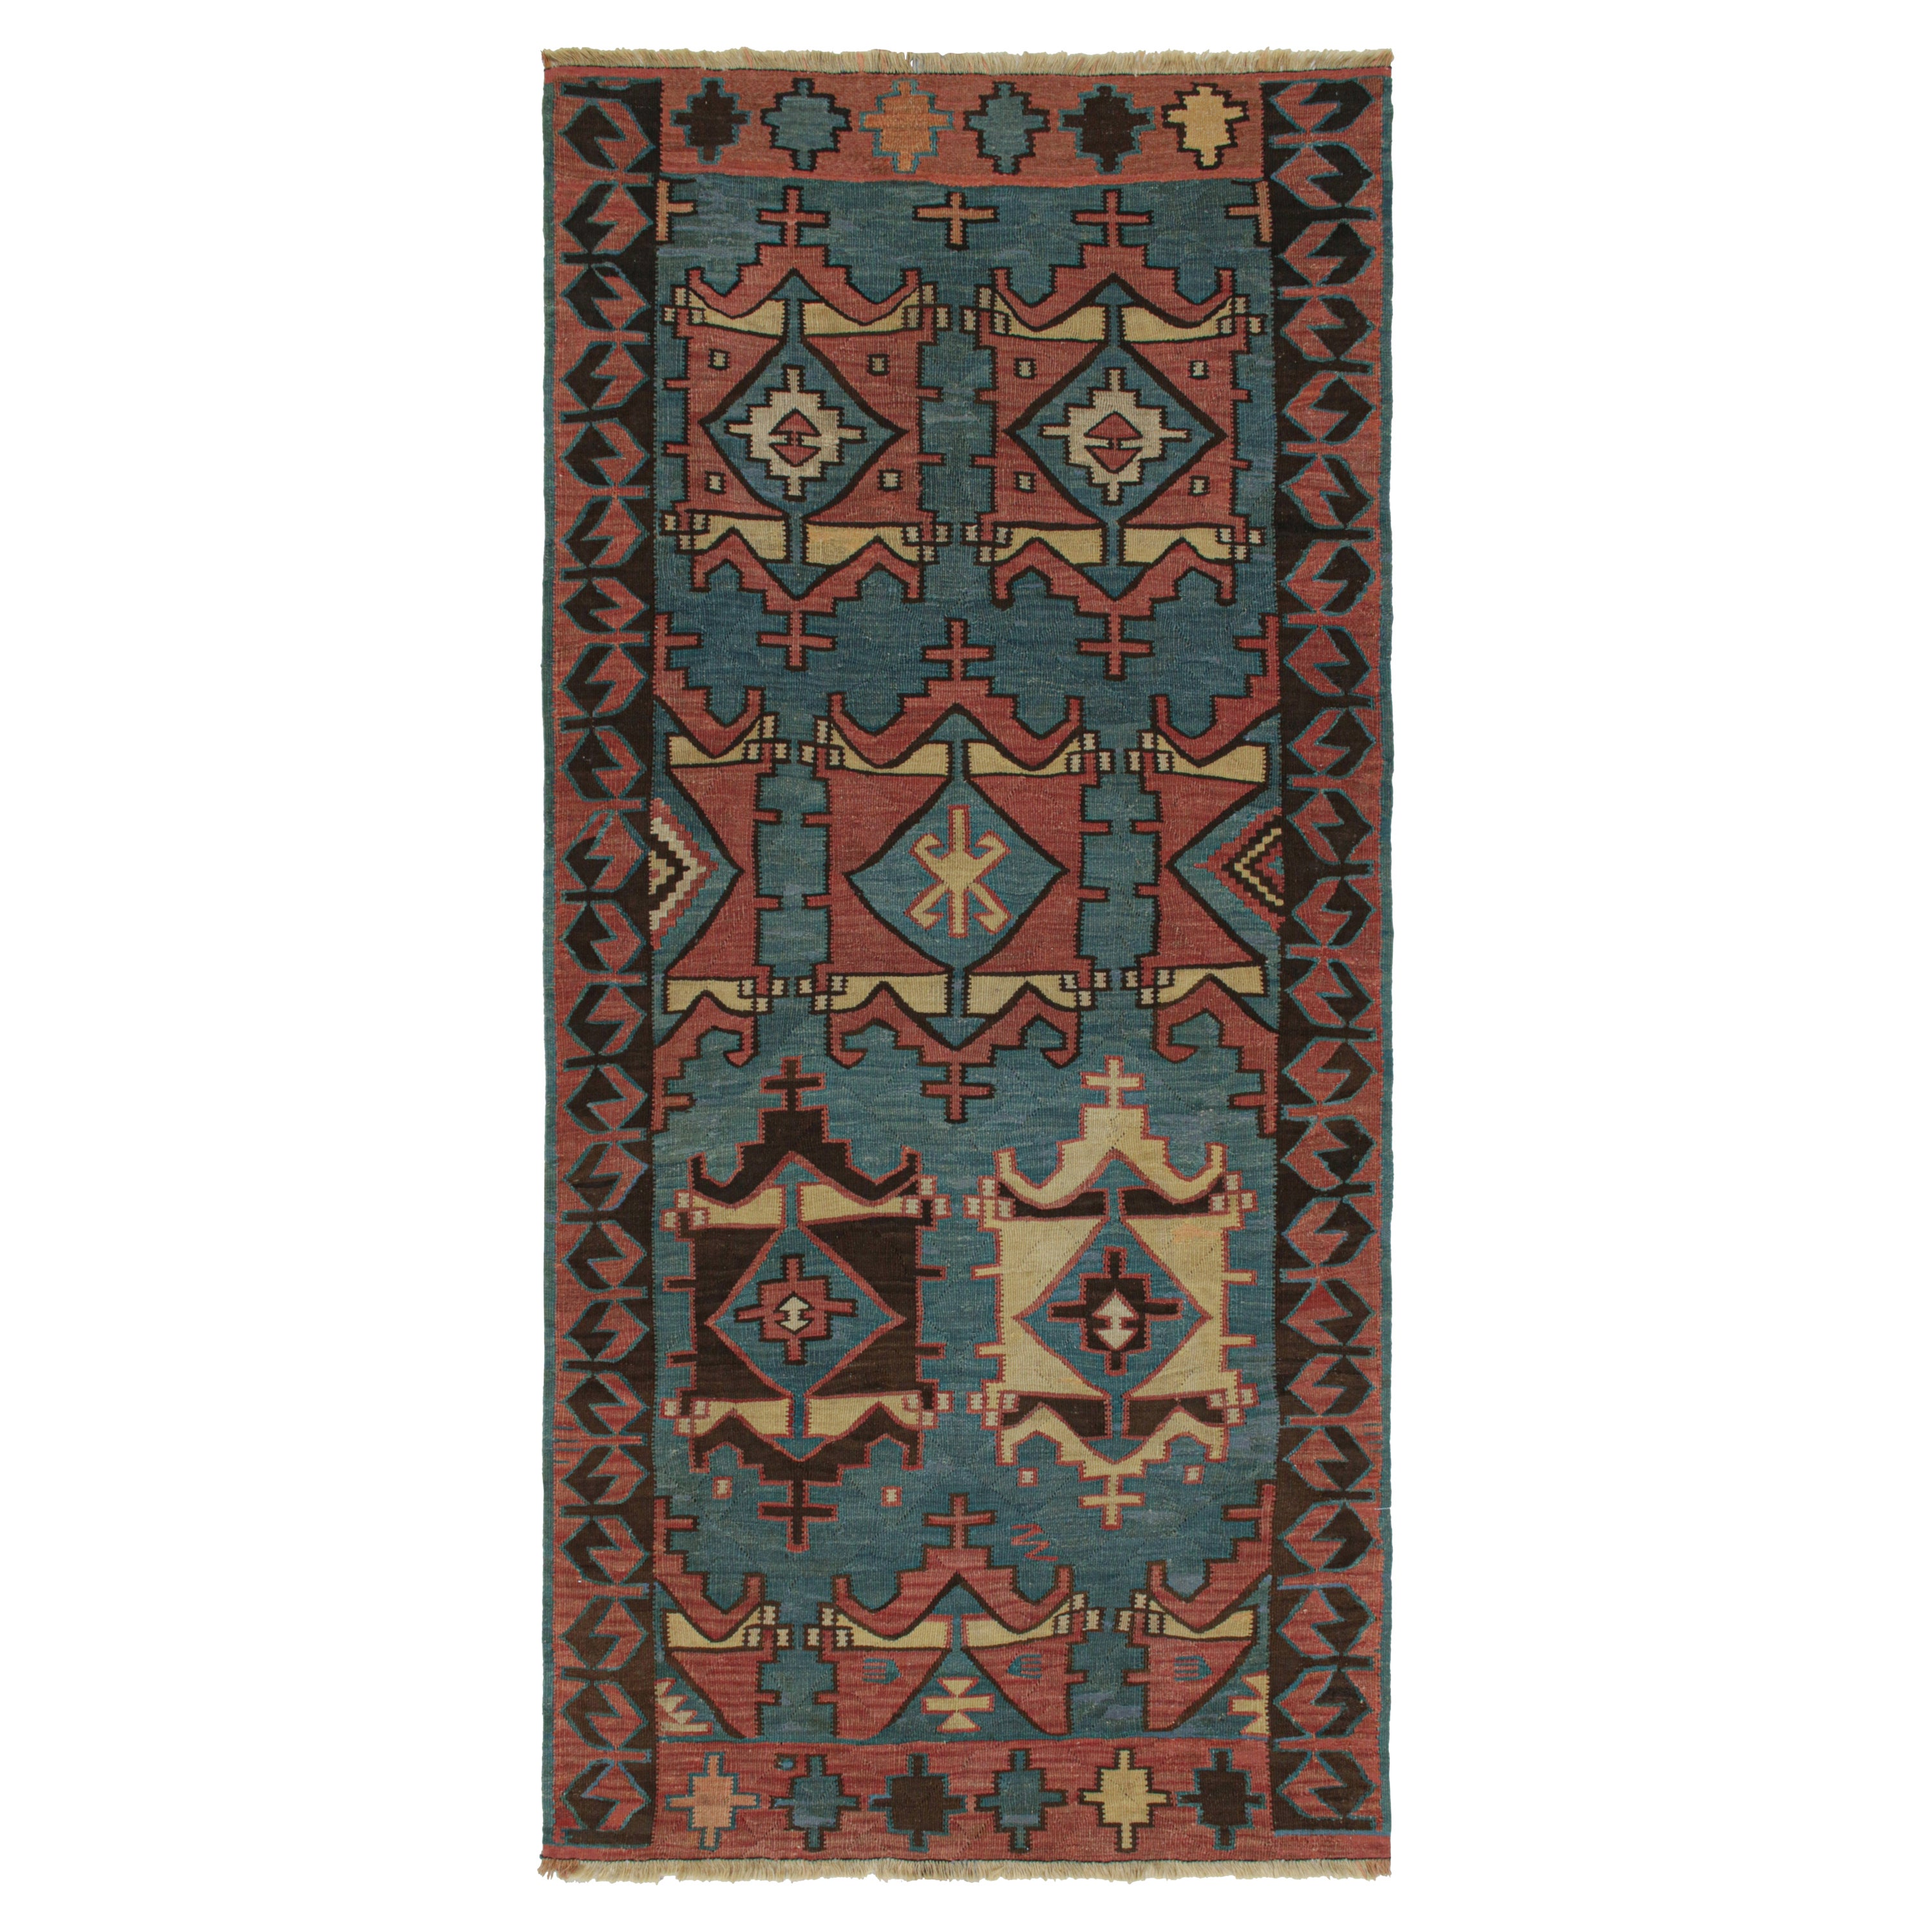 Vintage Persian Kilim in Blue & Red Tribal Patterns